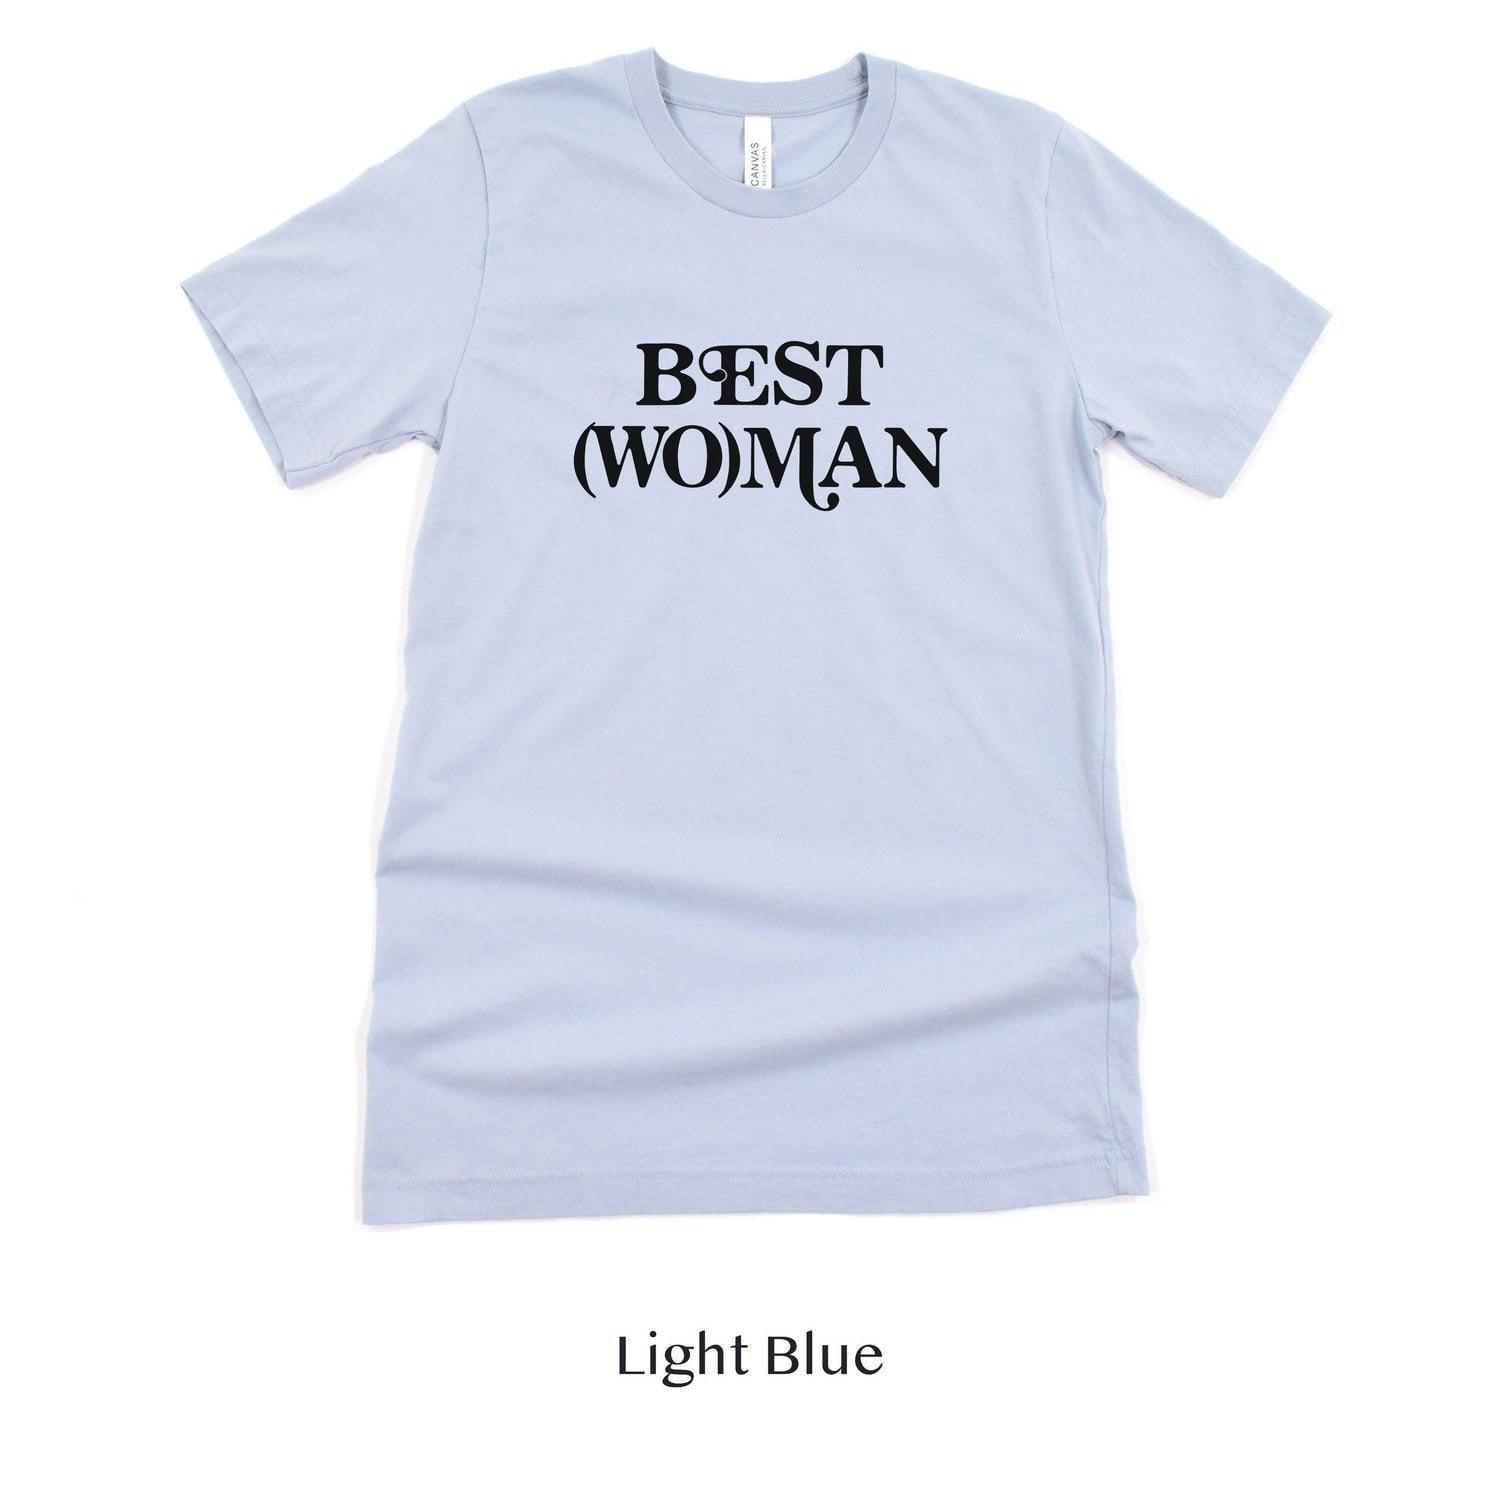 Best (Wo)man Retro Short-sleeve Tee for Best Woman by Oaklynn Lane - light blue shirt